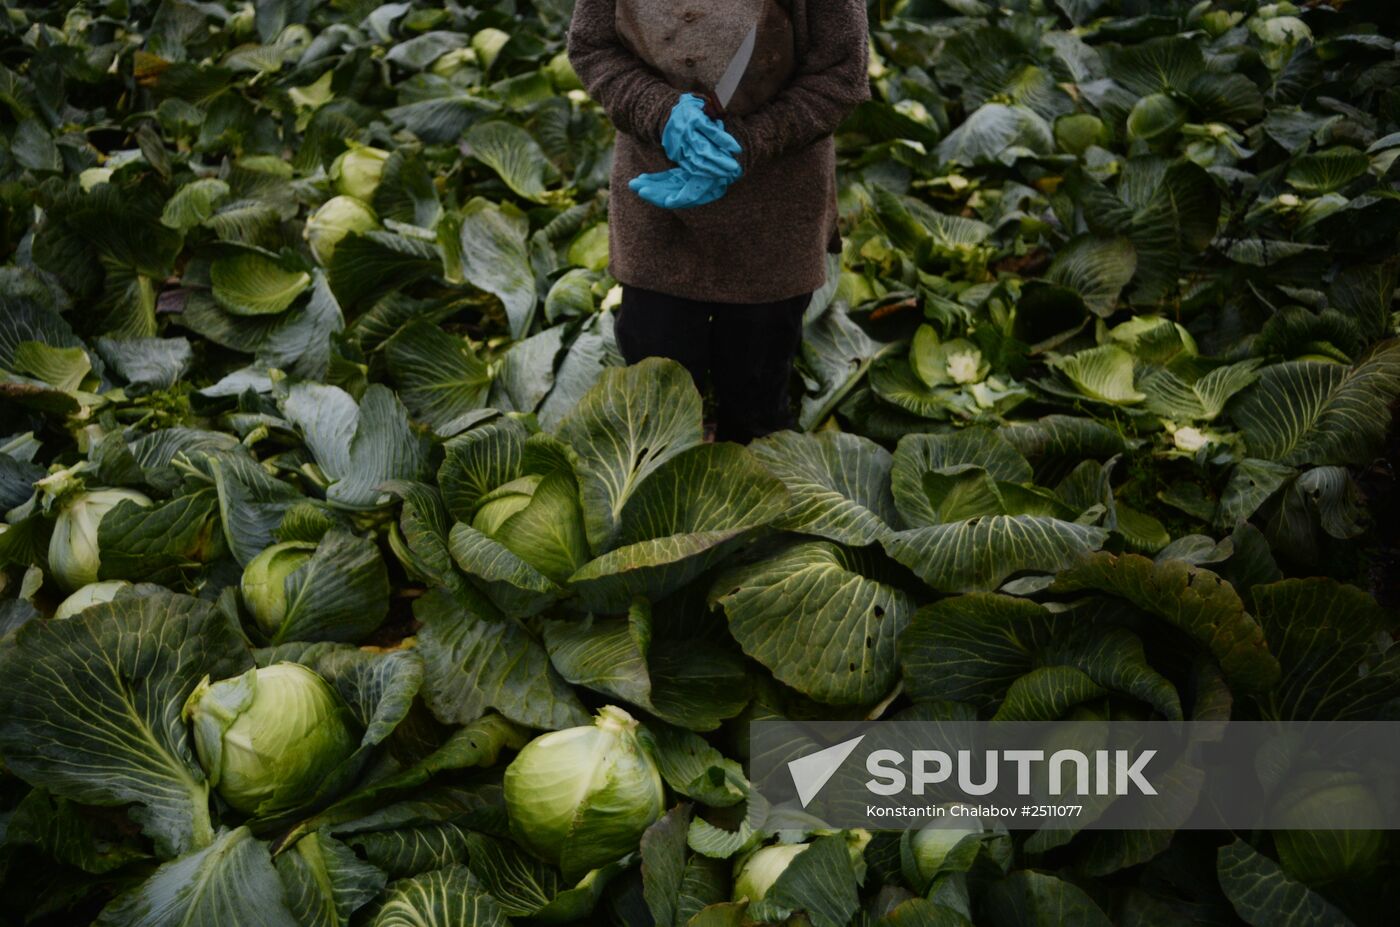 Harvesting cabbage in Novgorod Region